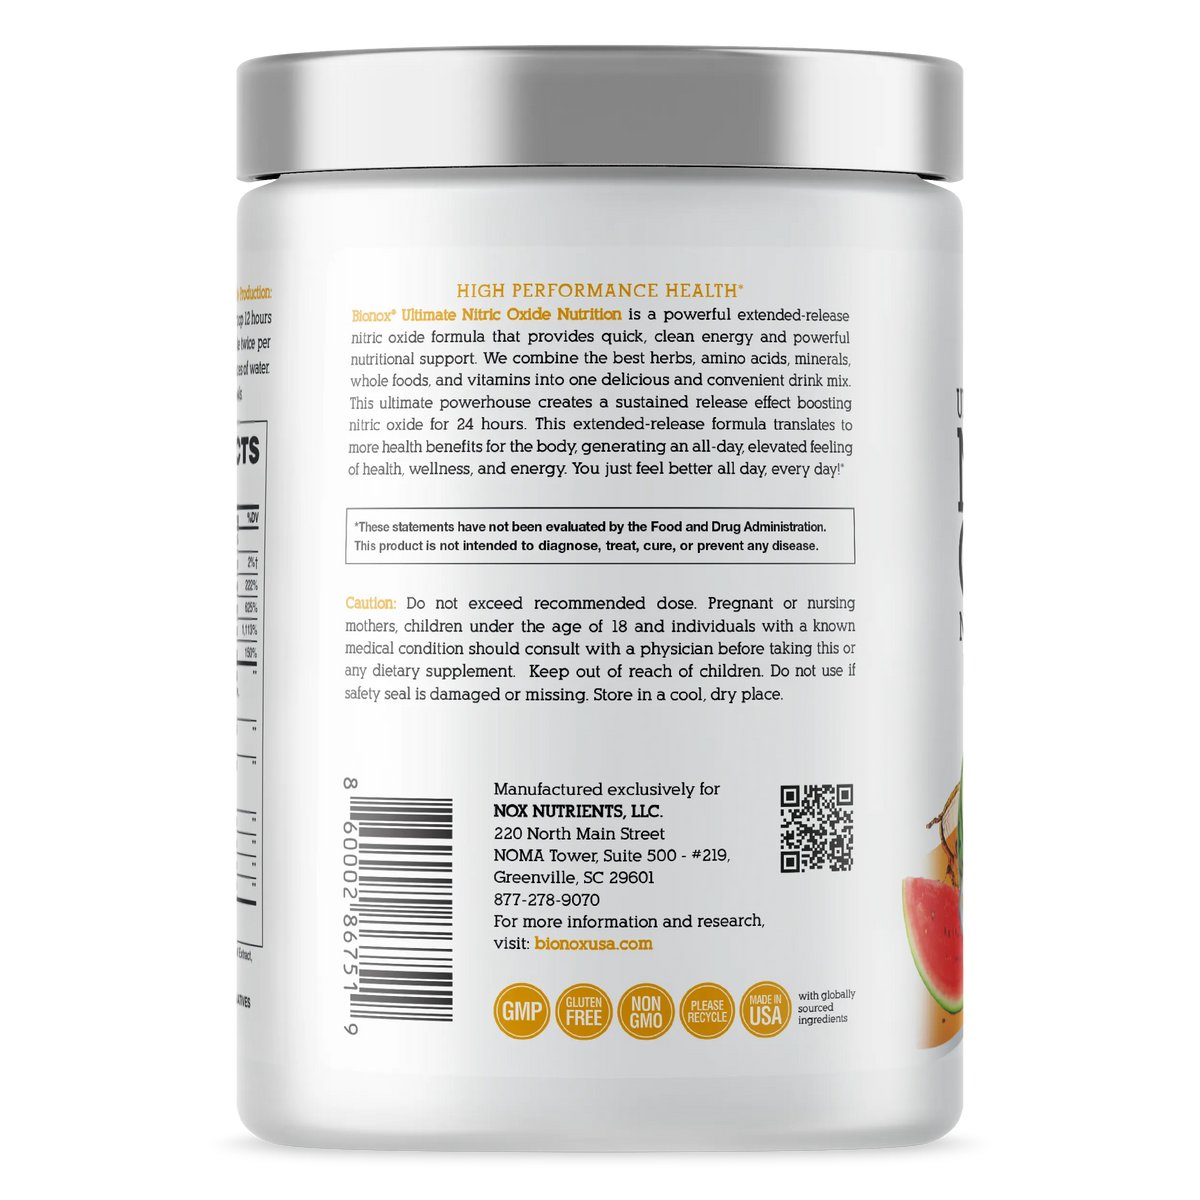 Ultimate Nitric Oxide Nutrition Citrus Splash Flavor - Large - 30 Day Supply